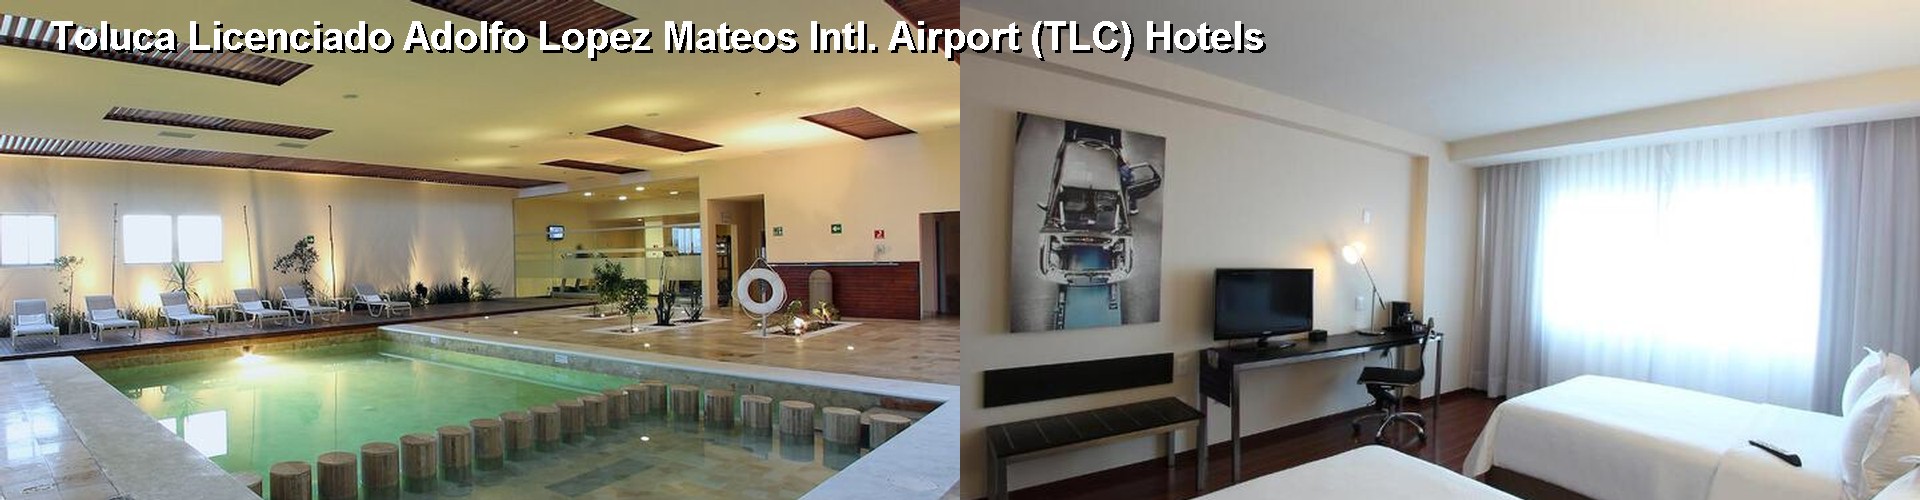 5 Best Hotels near Toluca Licenciado Adolfo Lopez Mateos Intl. Airport (TLC)